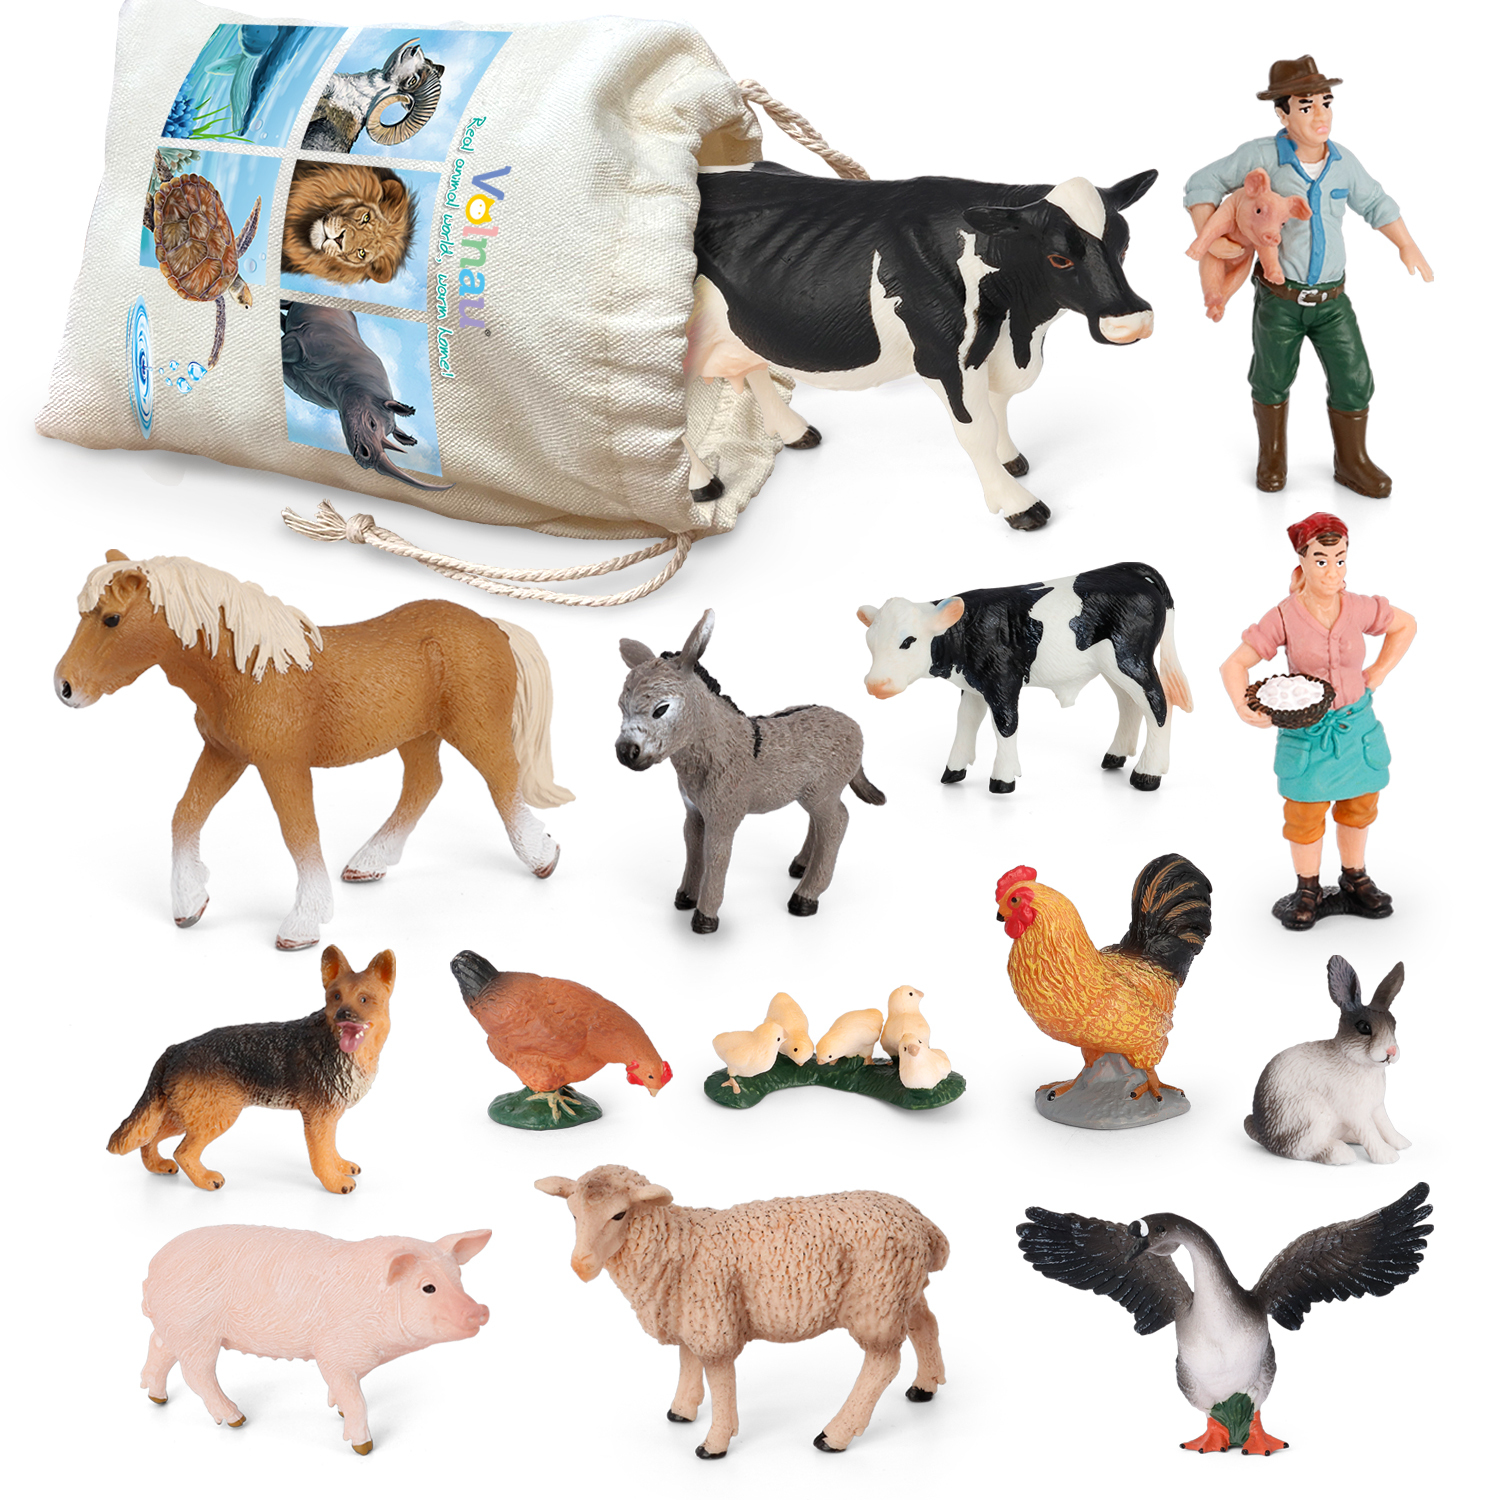 Farmer & 4 Cows Kids Toys Gift Educational Farm Animal Figures Playset 